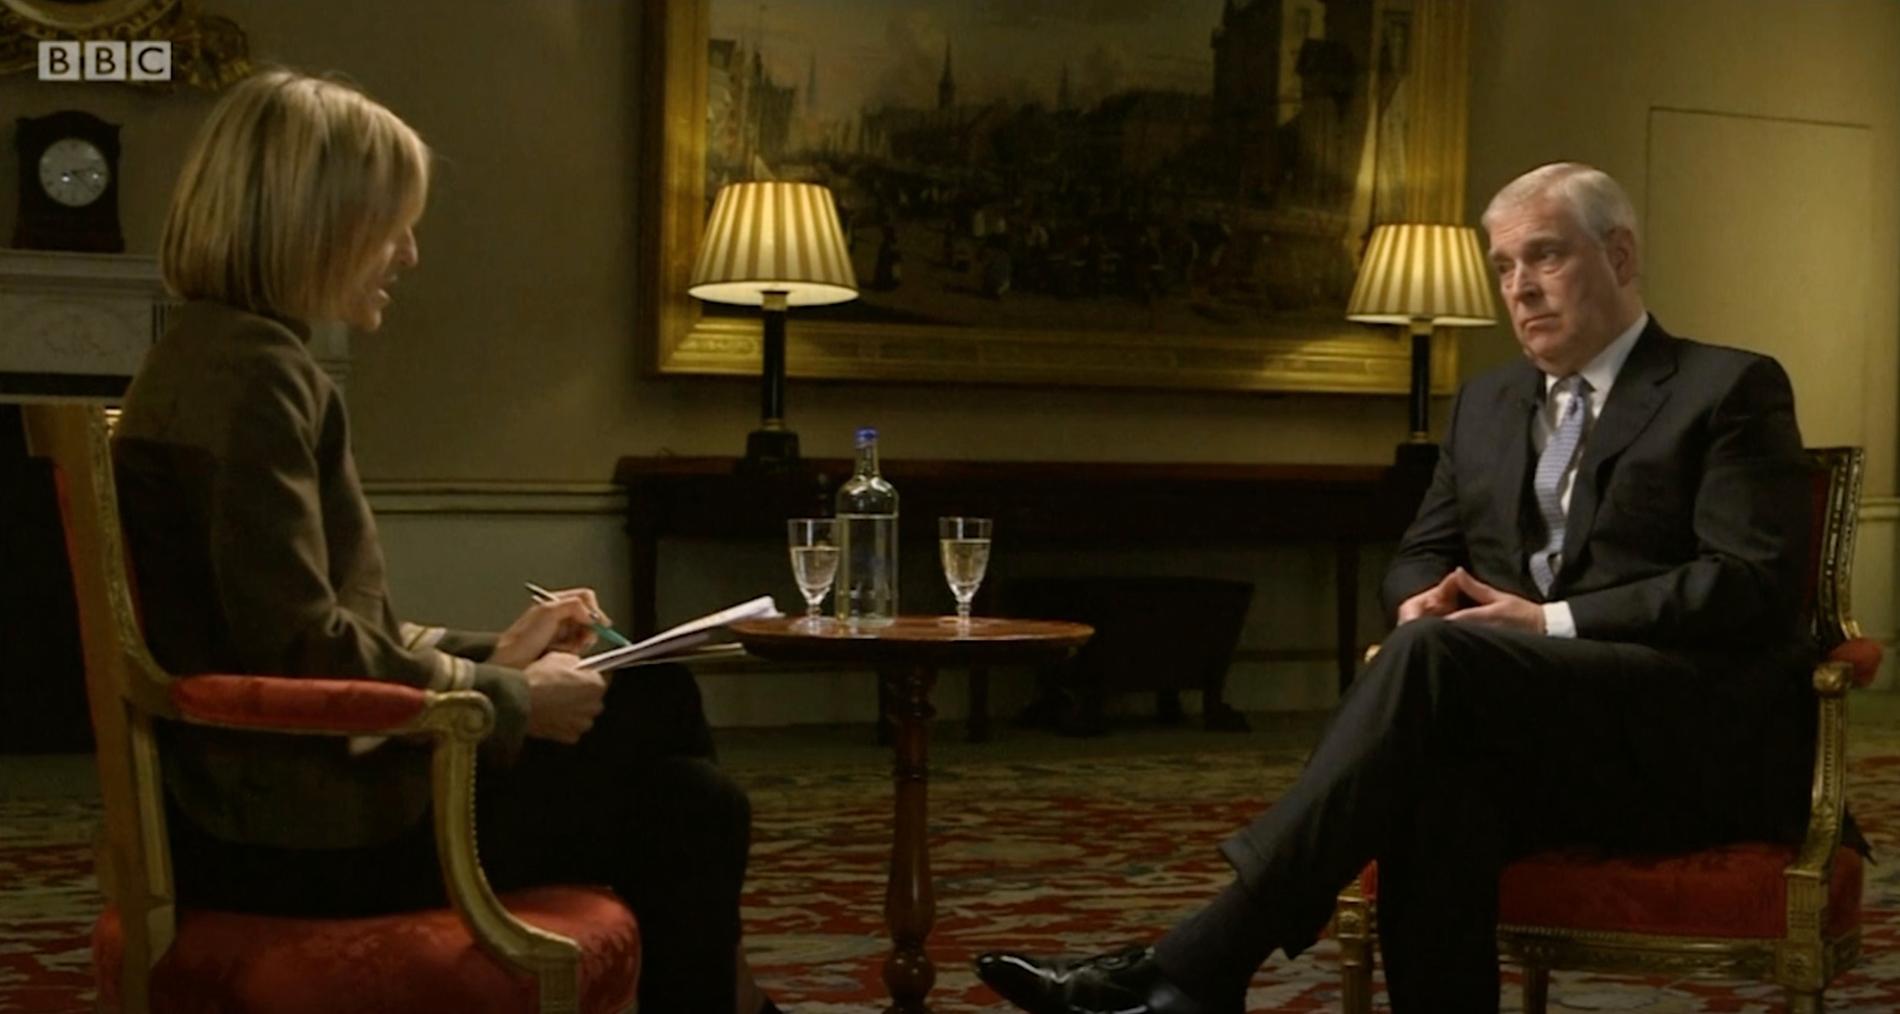 BBC-journalisten Emily Maitlis intervjuade prins Andrew.